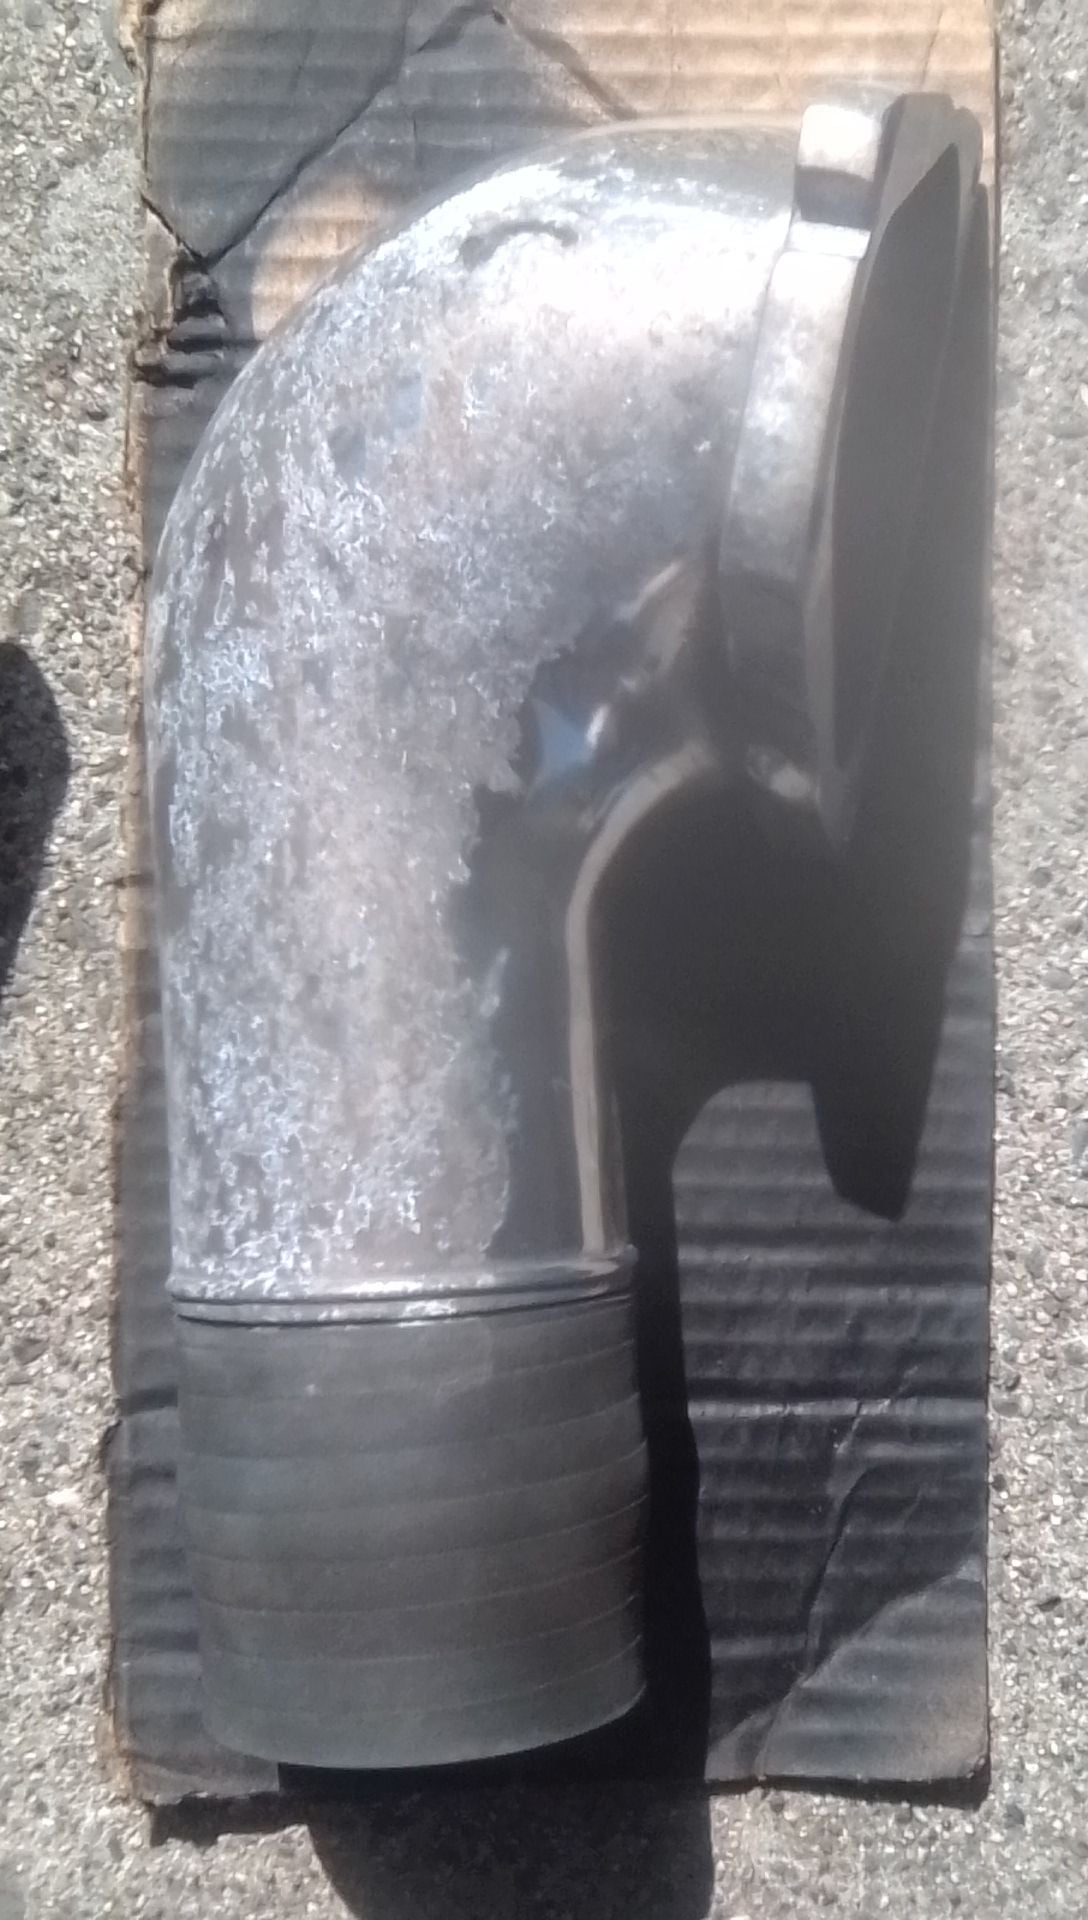 Accessories - Greddy compression elbow tube.... - Used - 1993 to 2002 Mazda RX-7 - San Jose, CA 95121, United States